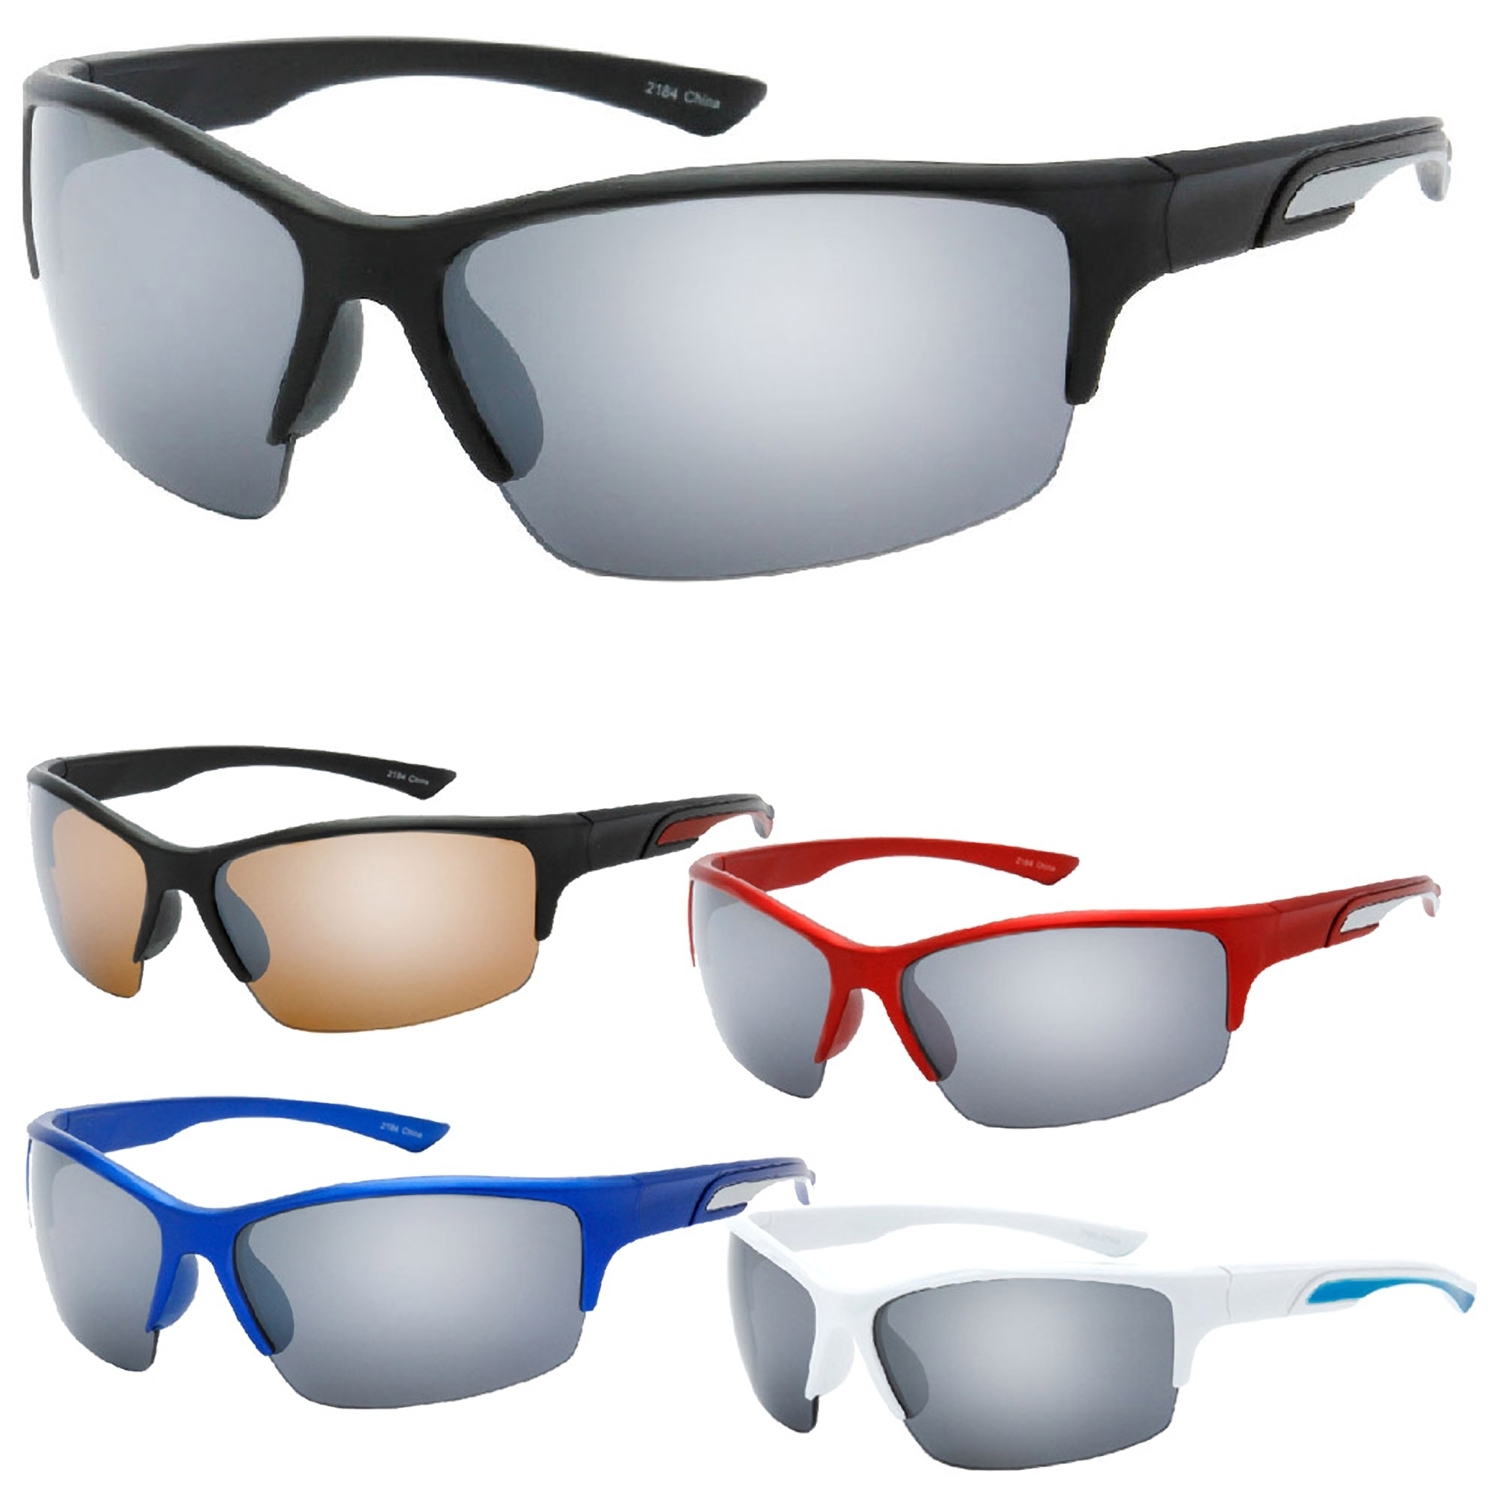 MLC Eyewear Model 84 UV400 Light Weight Sport Frame Sunglasses - image 1 of 2